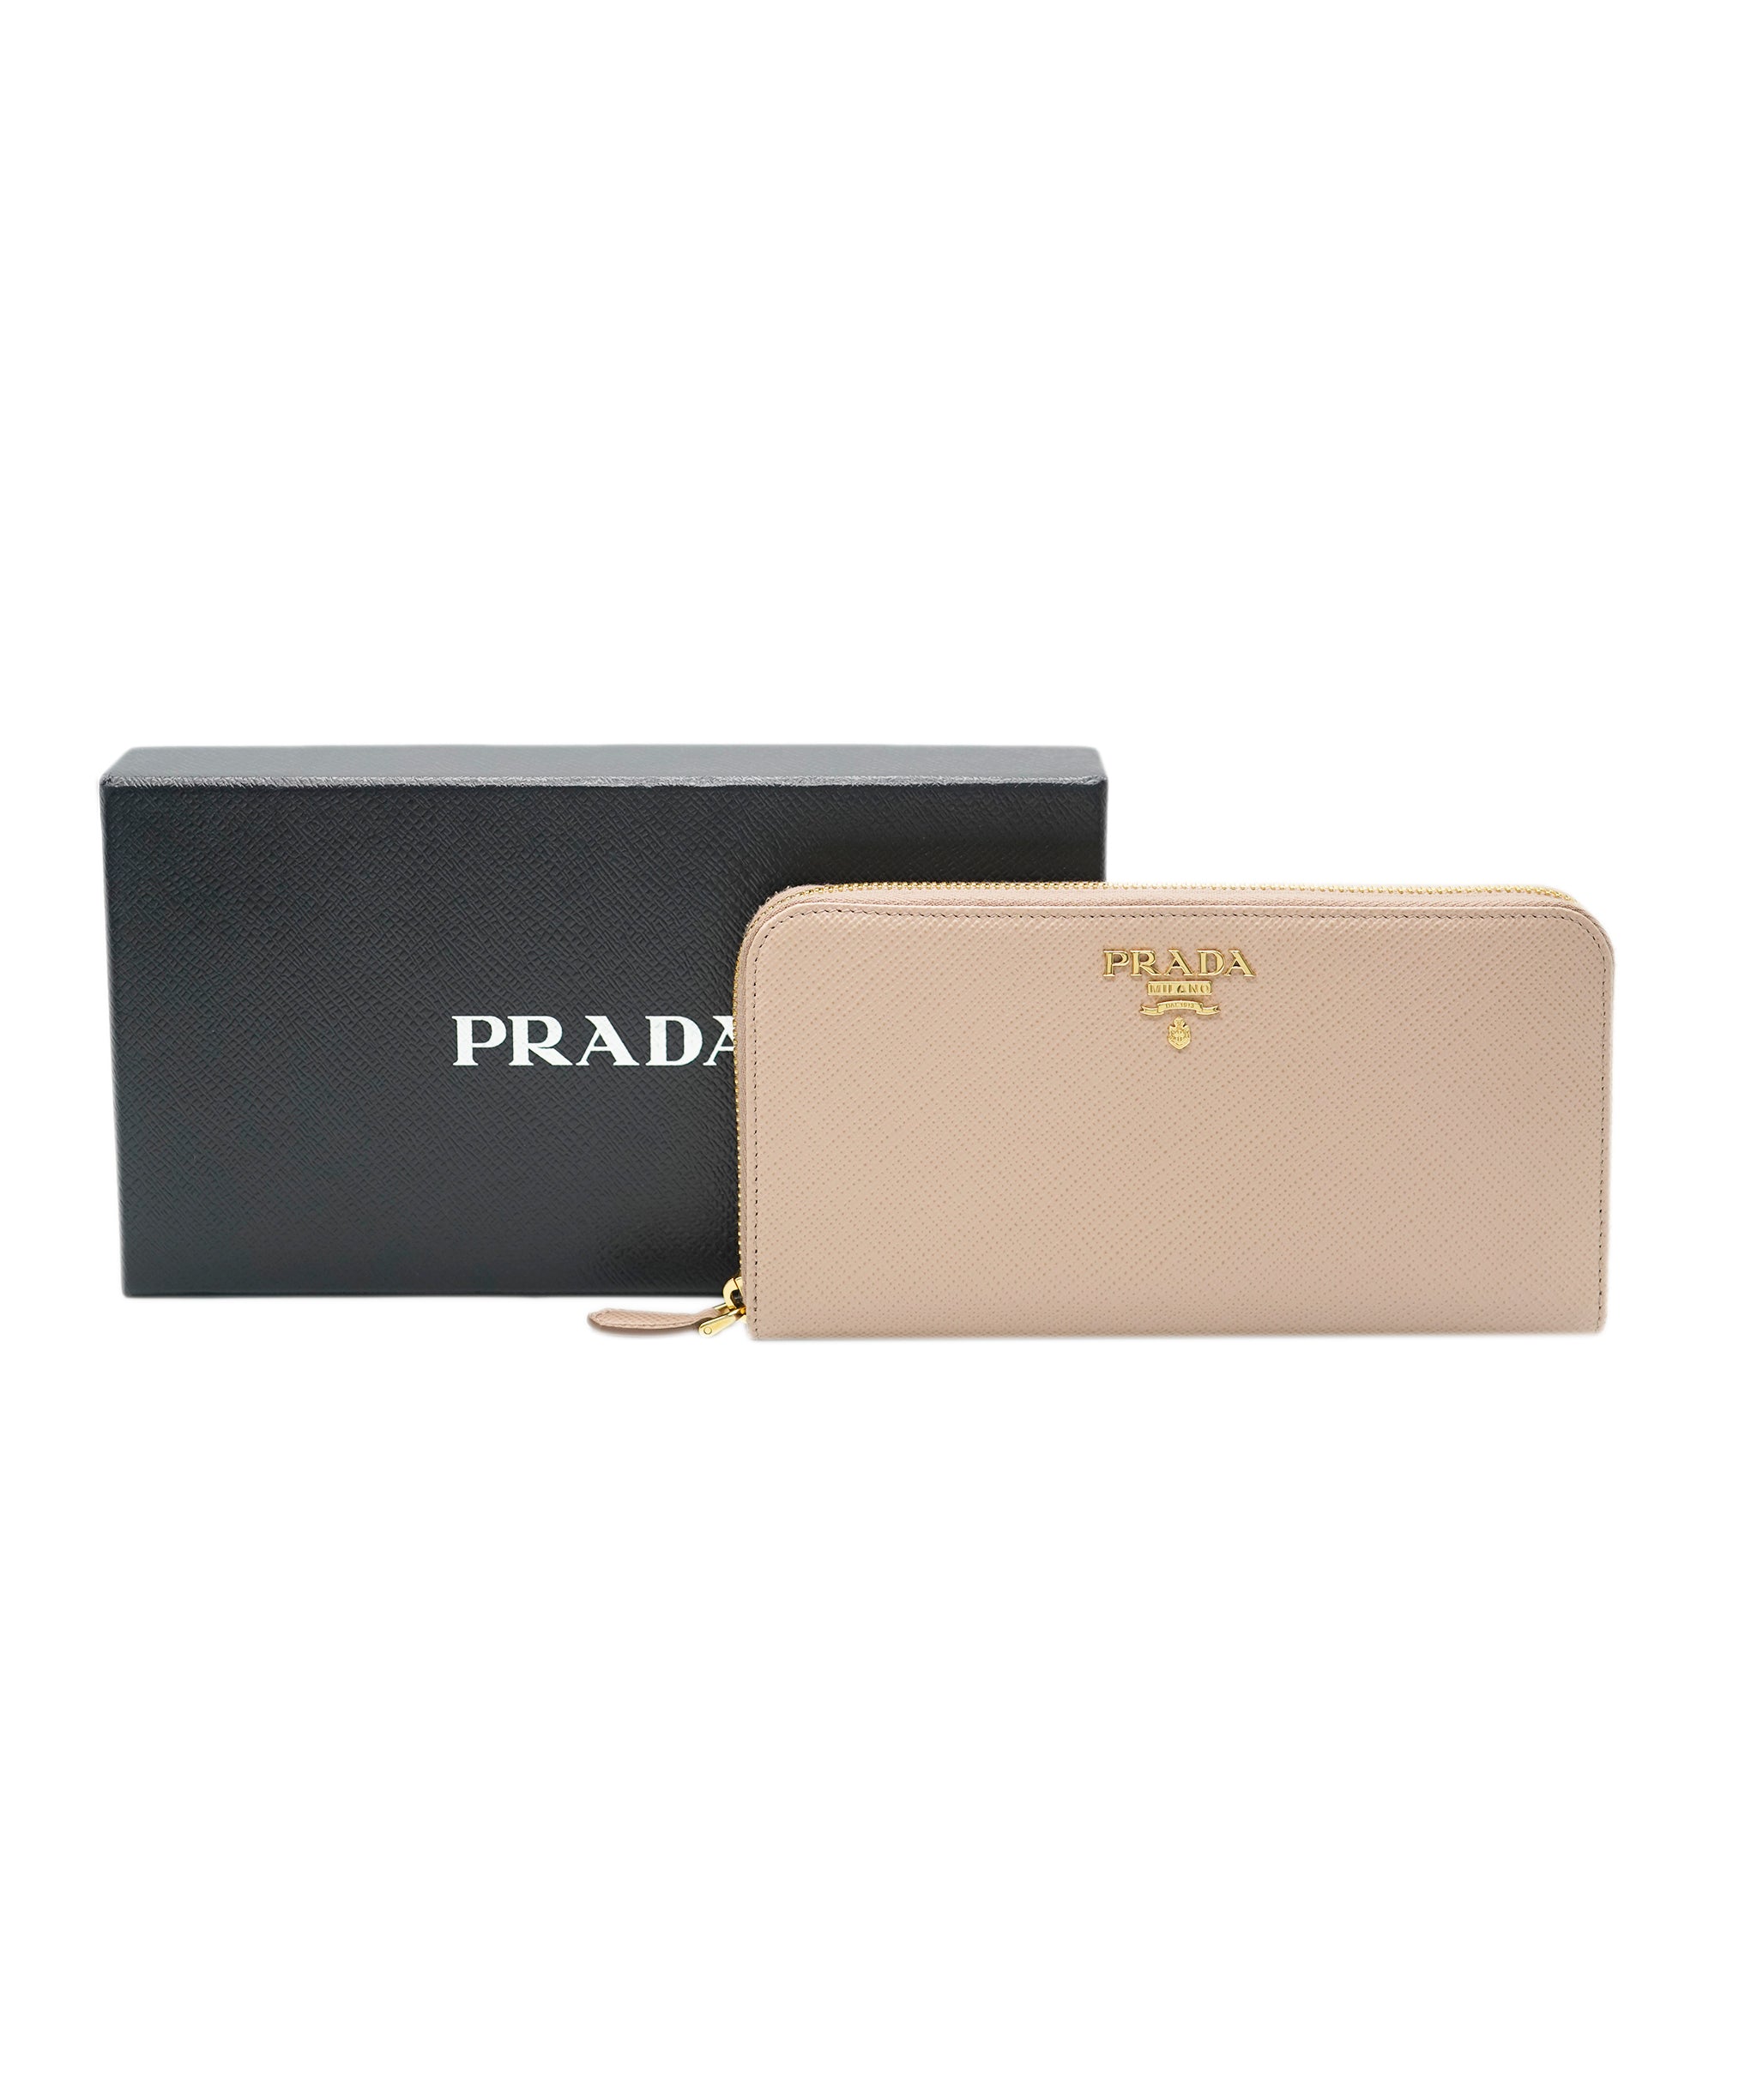 Prada Prada pink beige large saffiano zip wallet with GHW - AJC0652